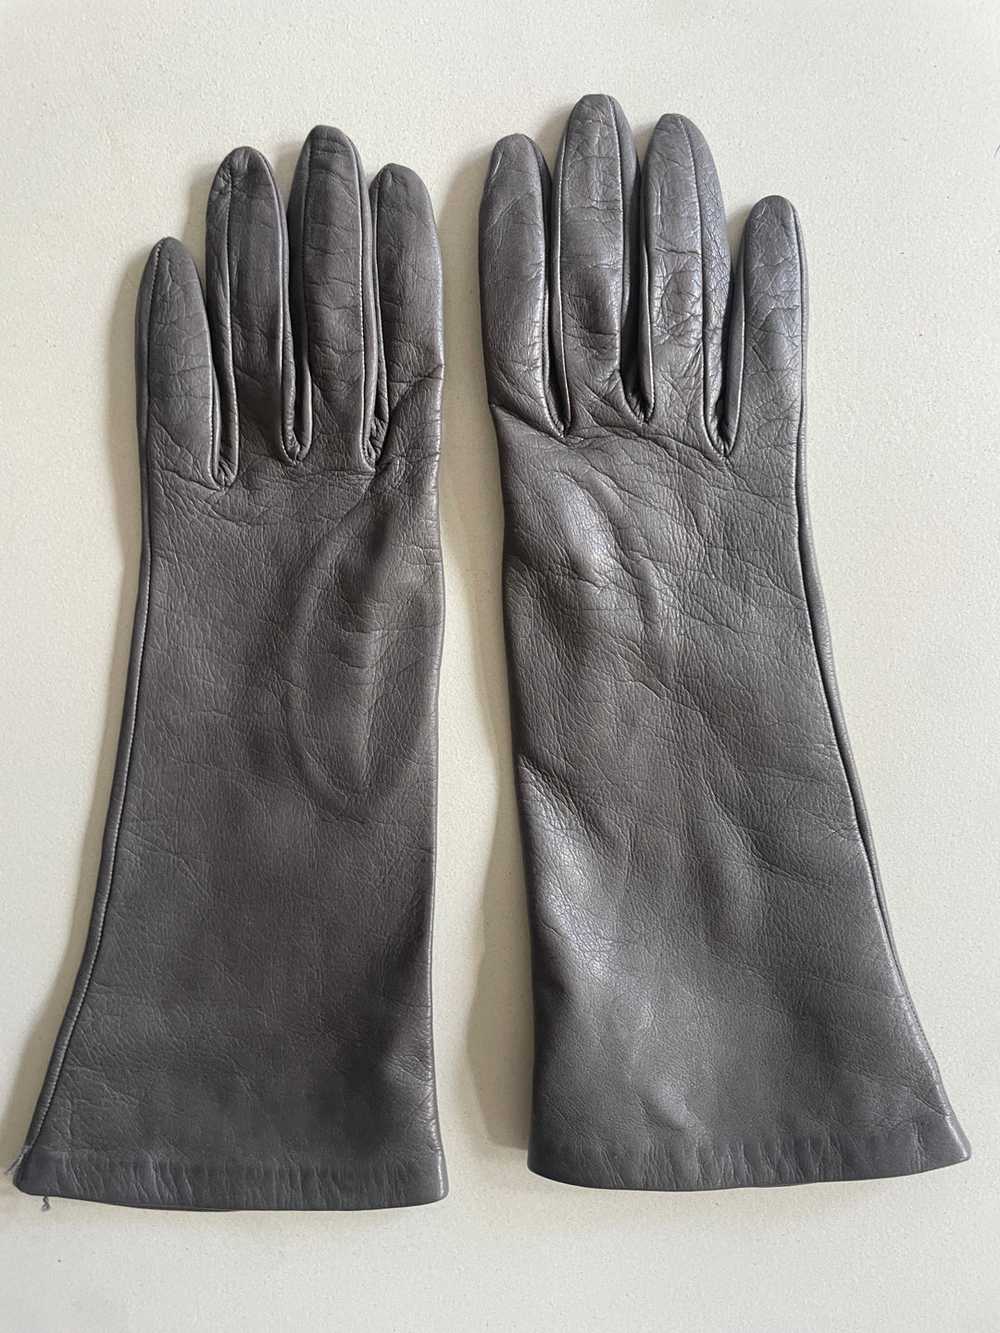 Vintage Gray Kid Leather Gloves - image 1